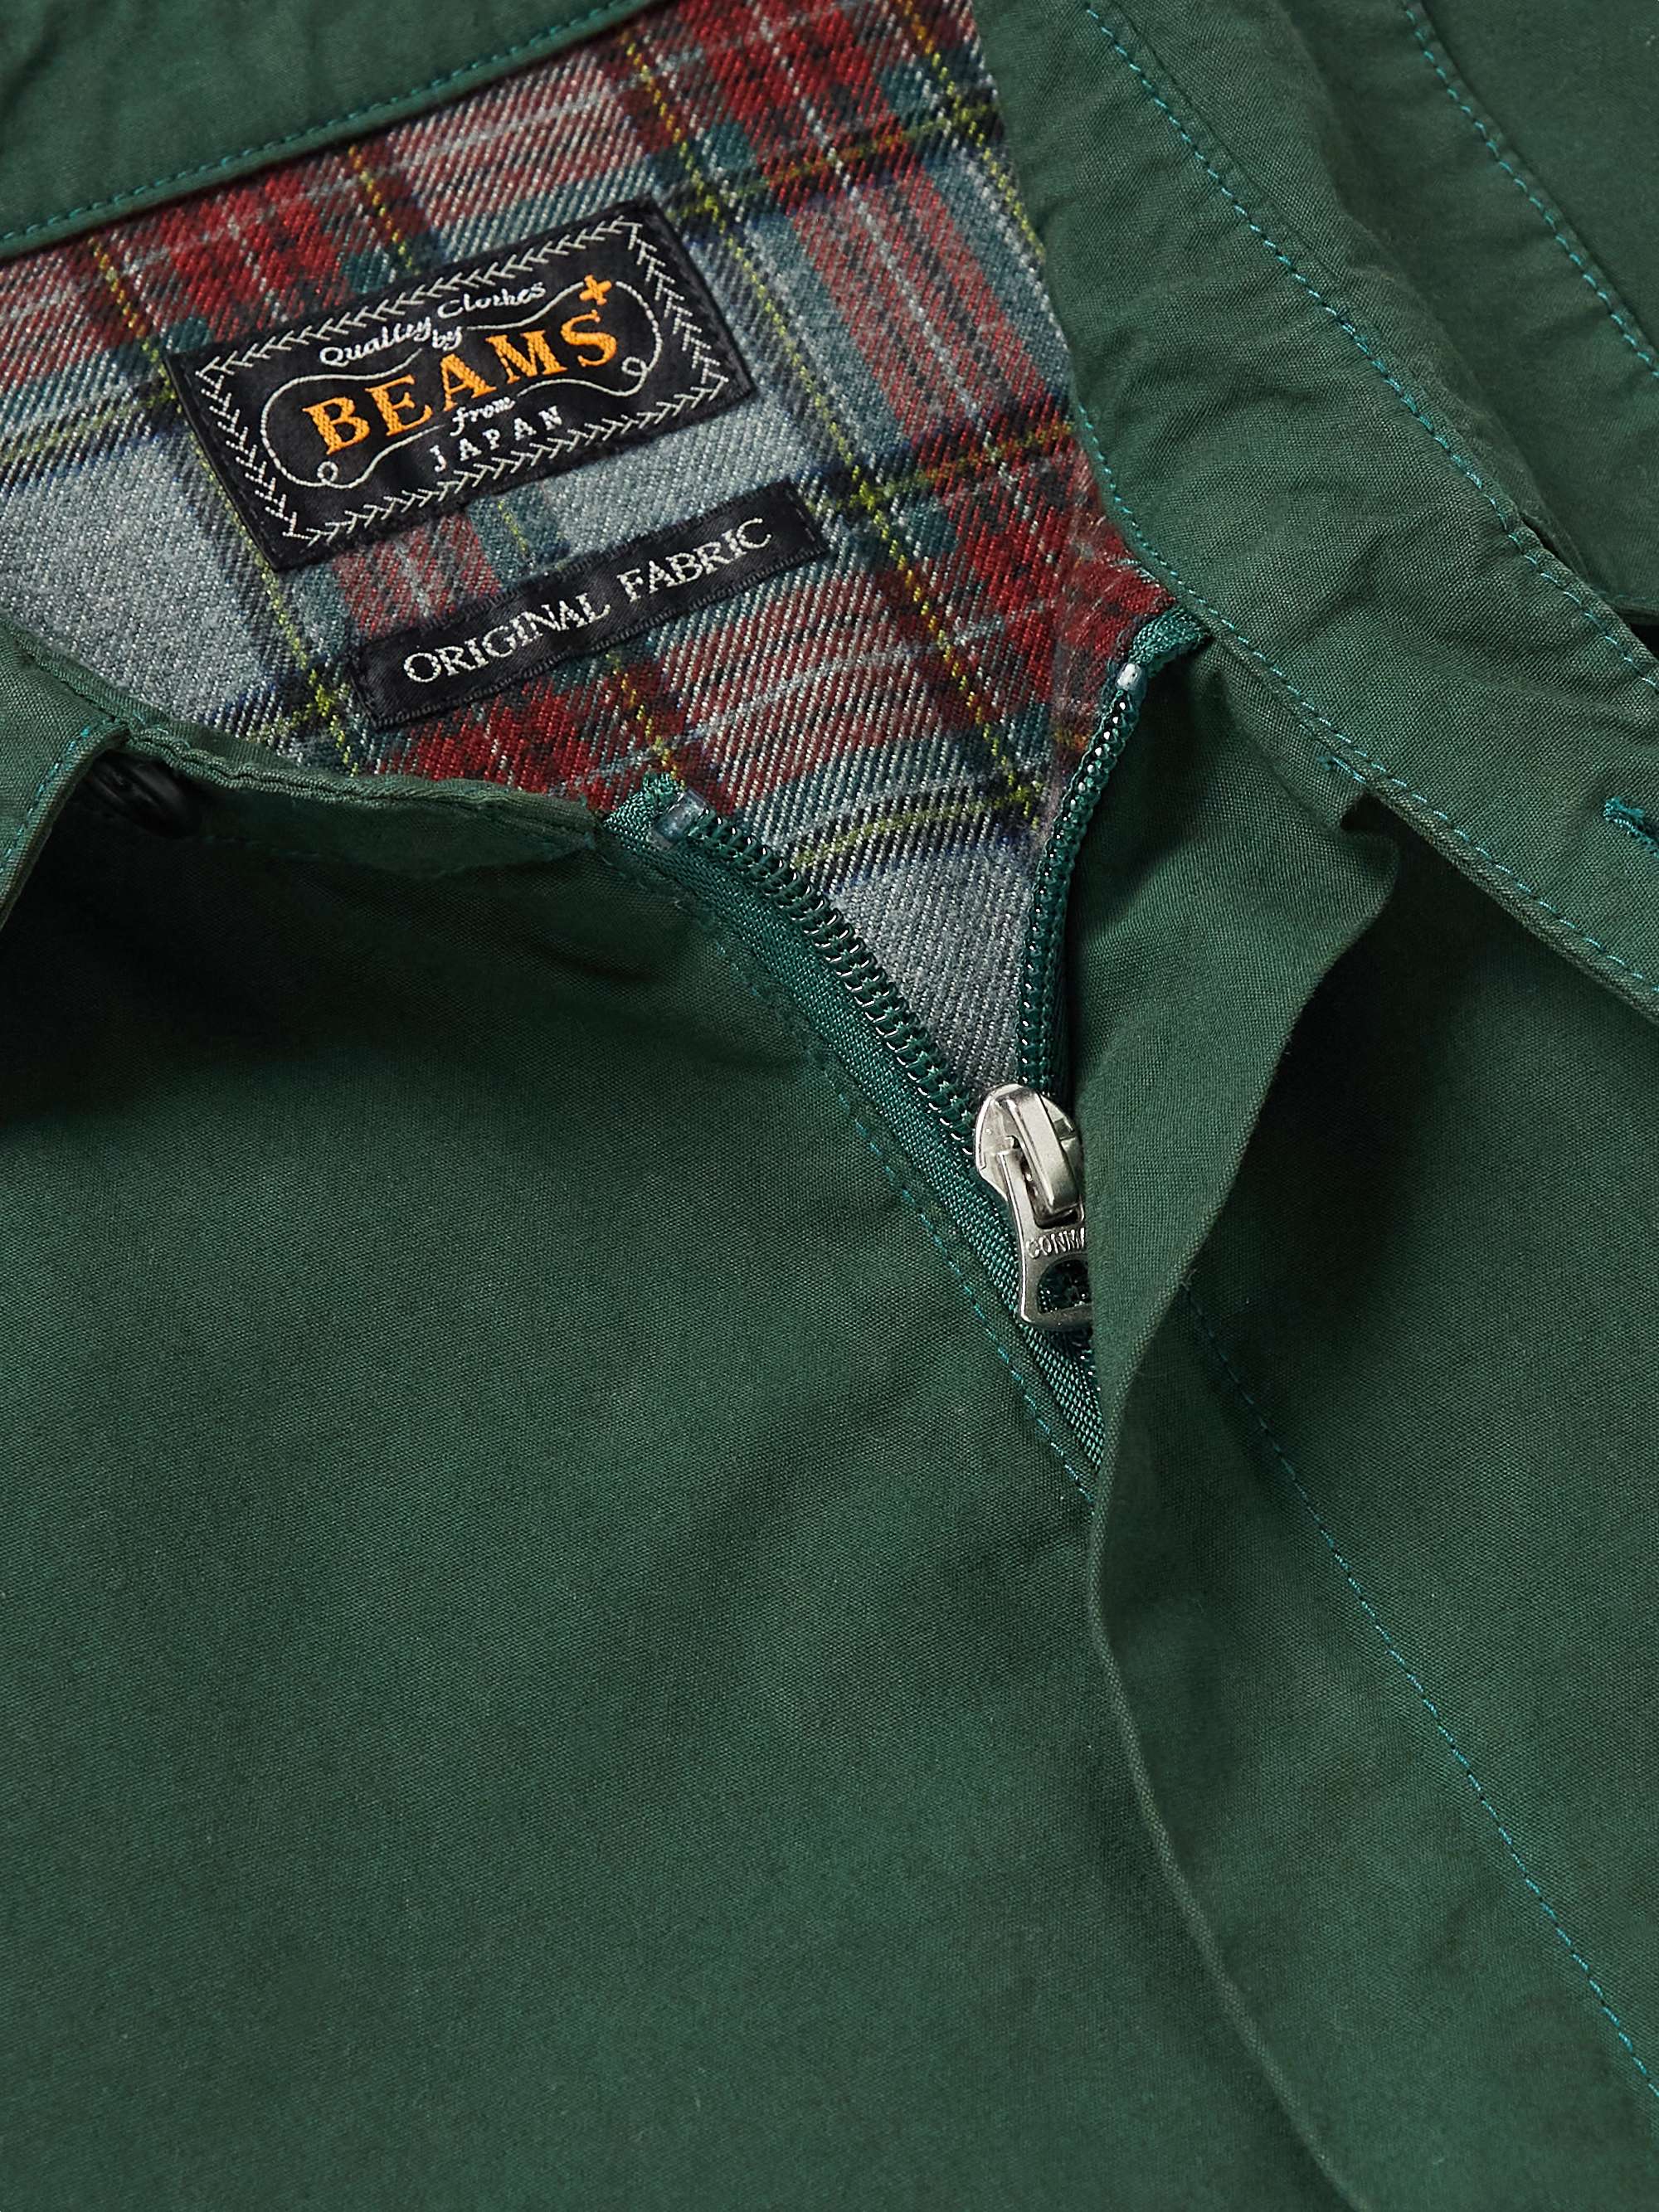 BEAMS PLUS Garment-Dyed Cotton Blouson Jacket